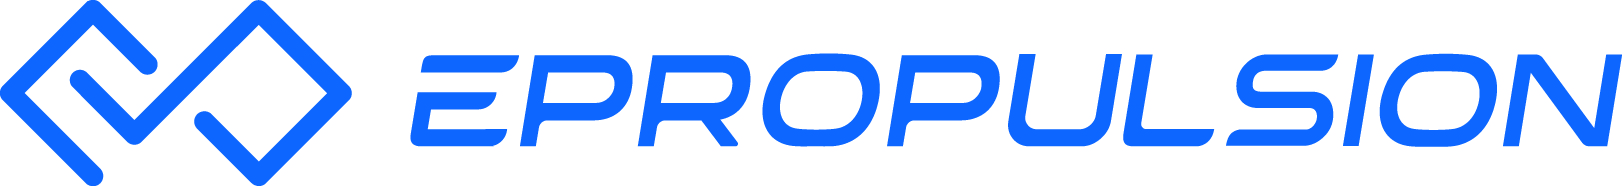 ePropulsion Logo